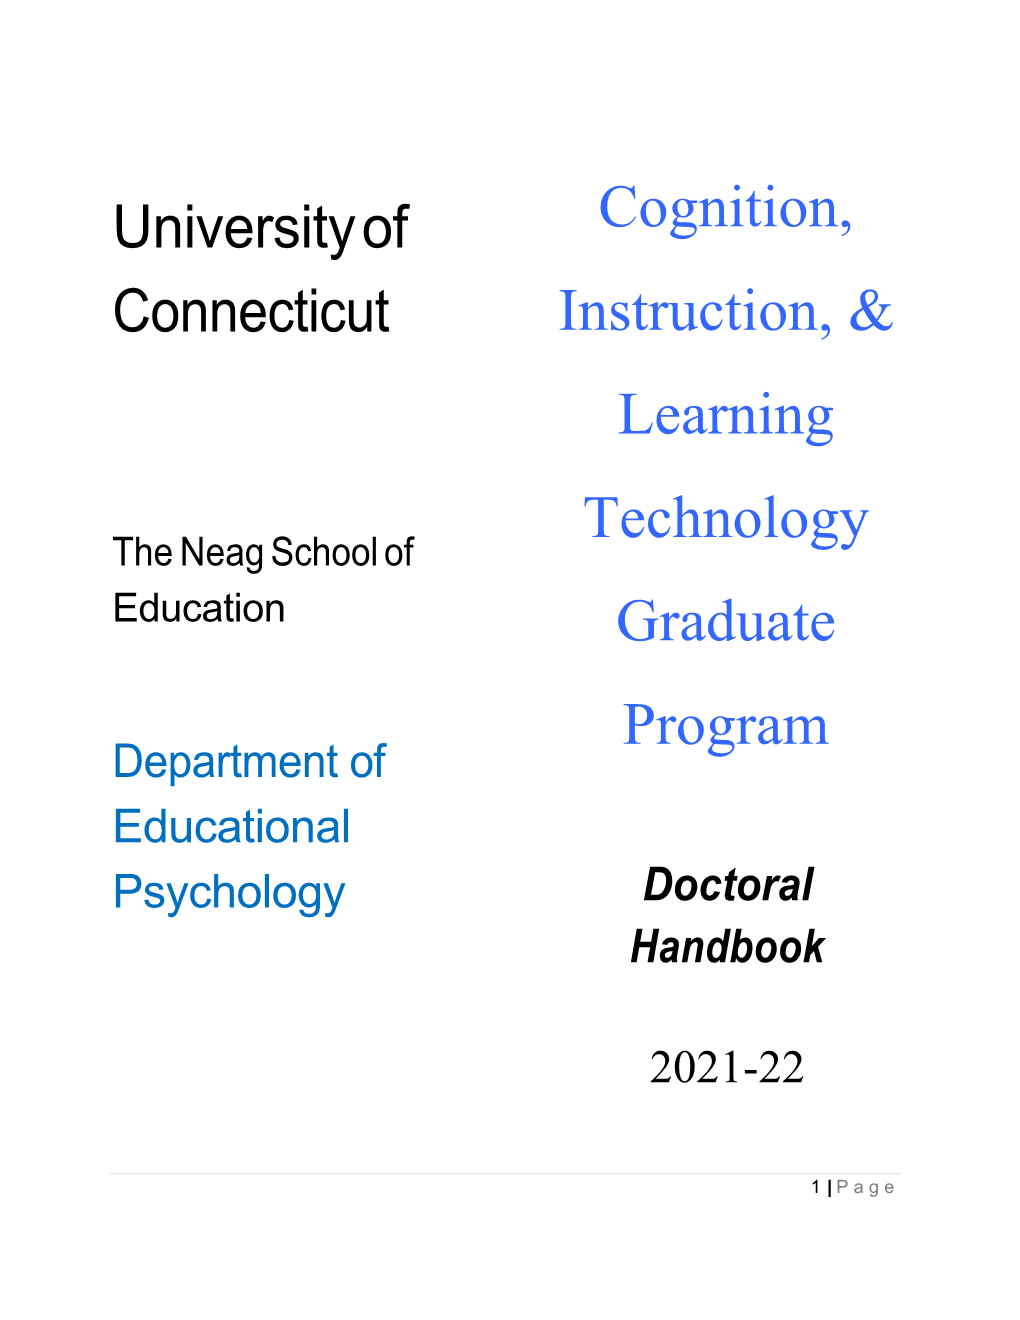 Cognition, Instruction, & Learning Technology Graduate Program